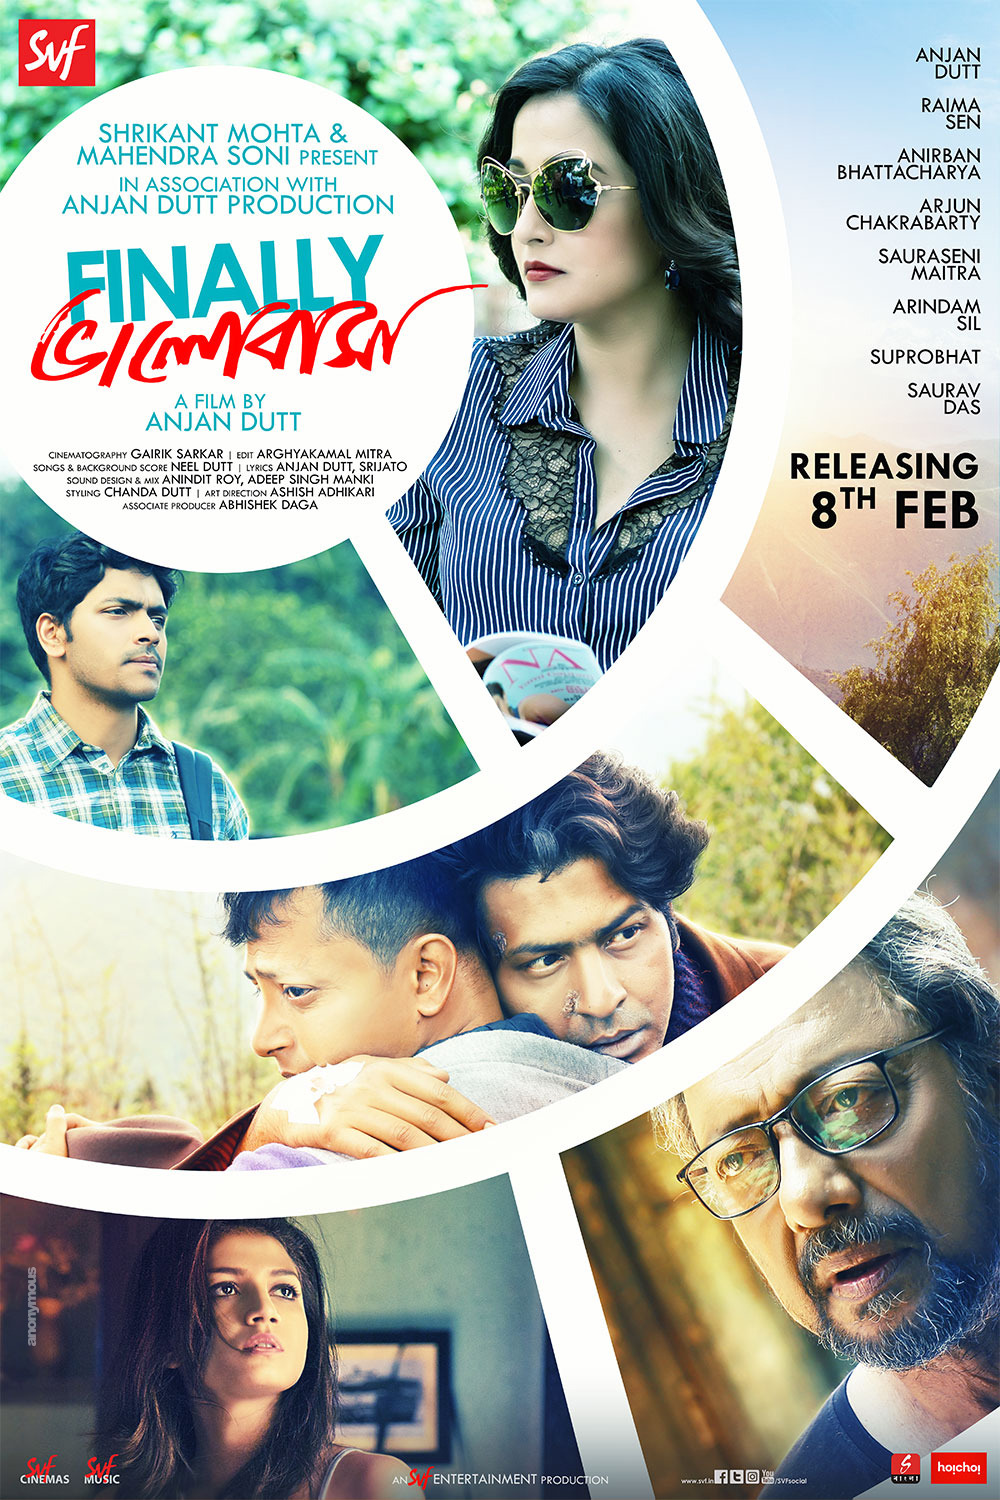 Extra Large Movie Poster Image for Finally Bhalobasha (#2 of 2)